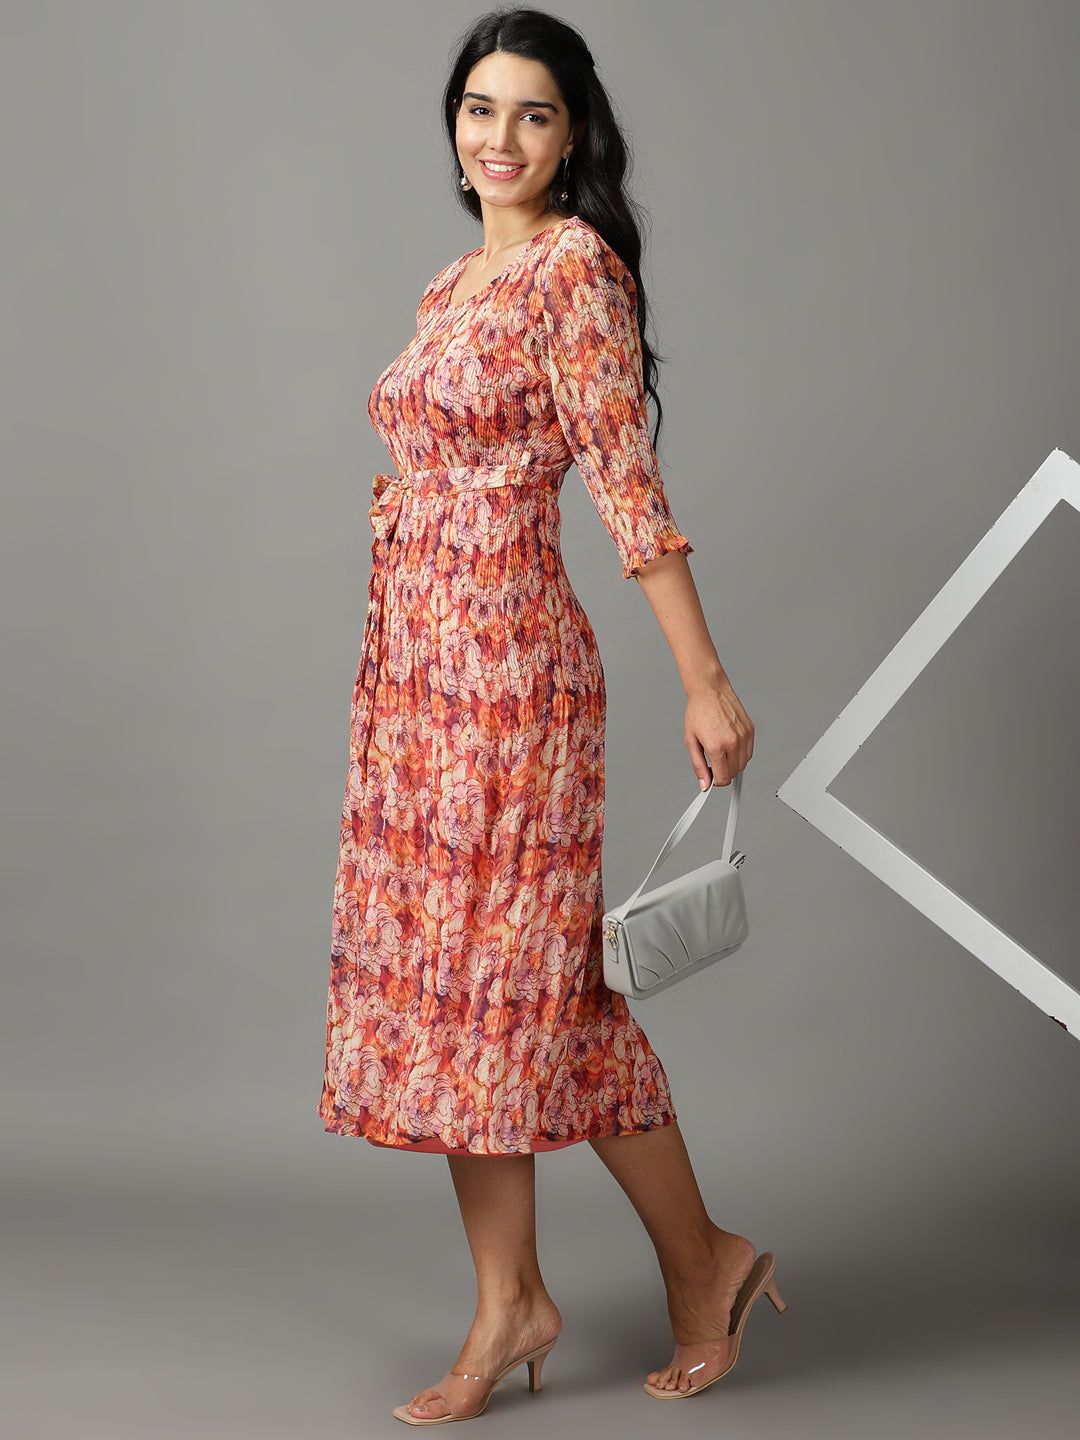 Women's Multi Printed A-Line Dress